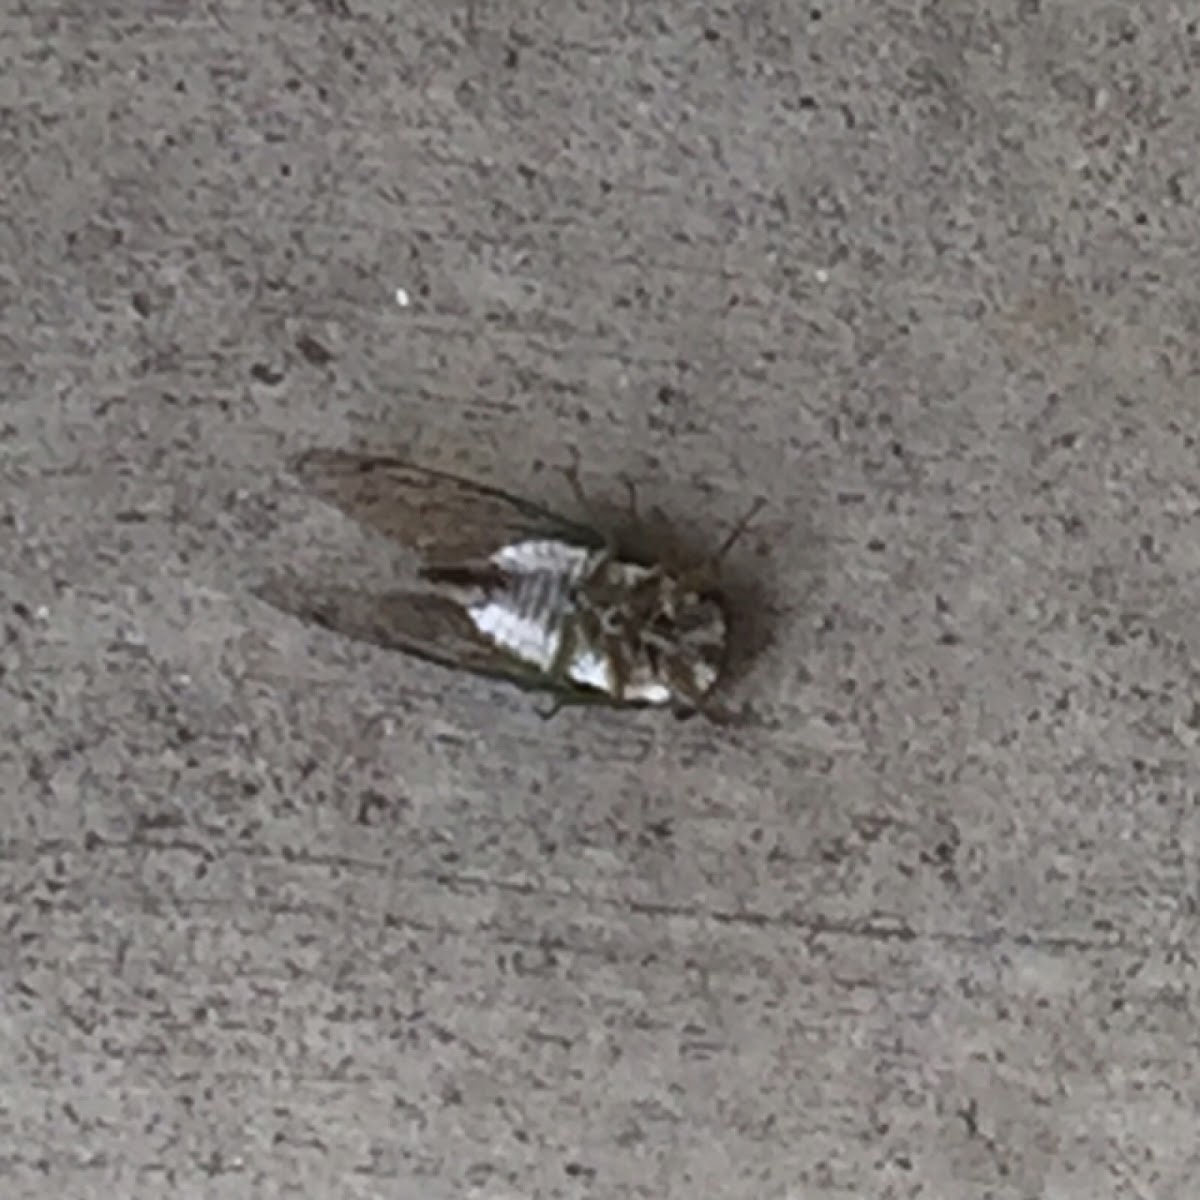 Dog-day cicada